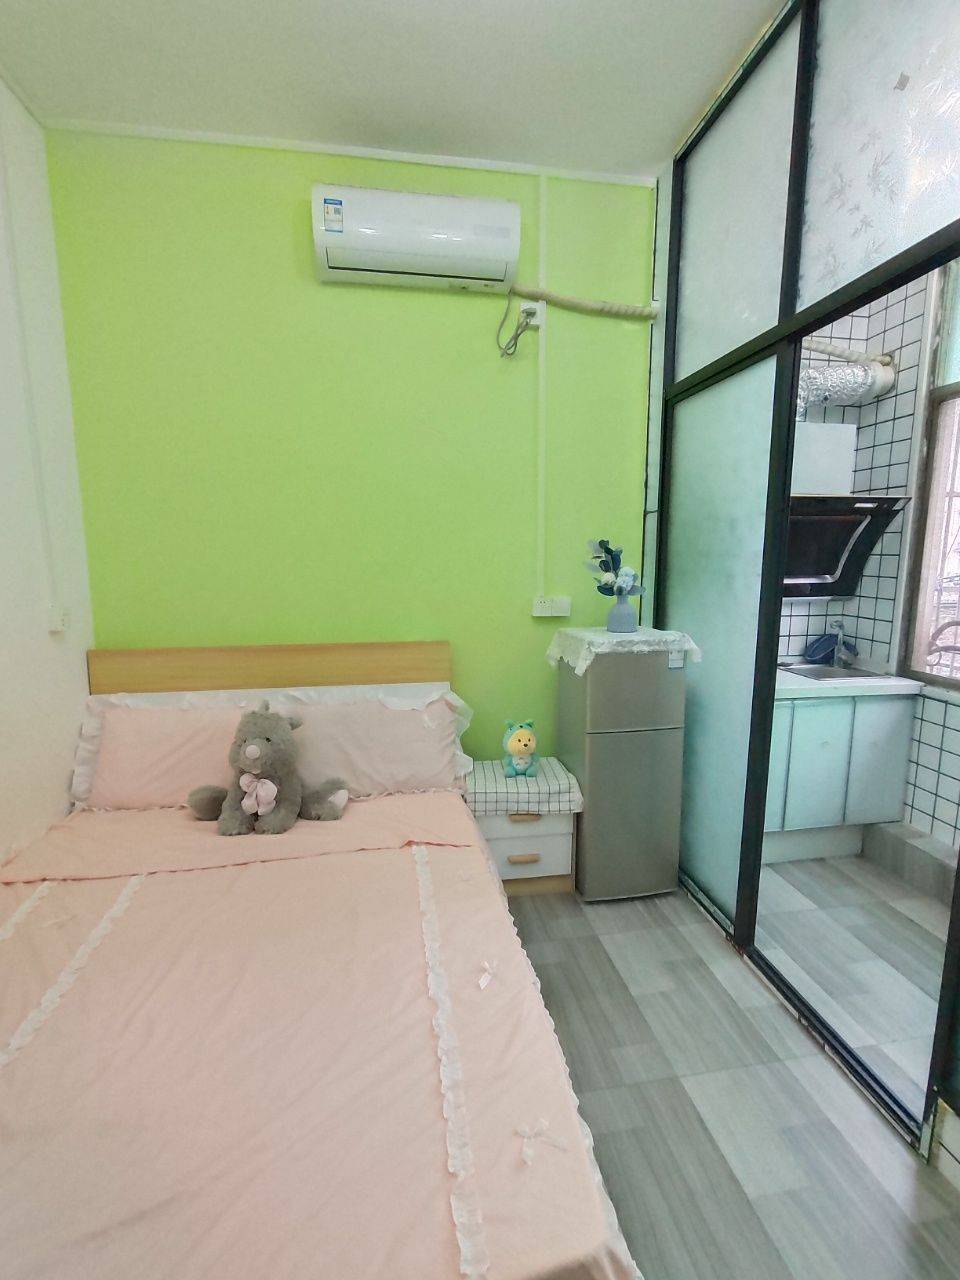 Changsha-Yuelu-Cozy Home,Clean&Comfy,No Gender Limit,Chilled,Pet Friendly